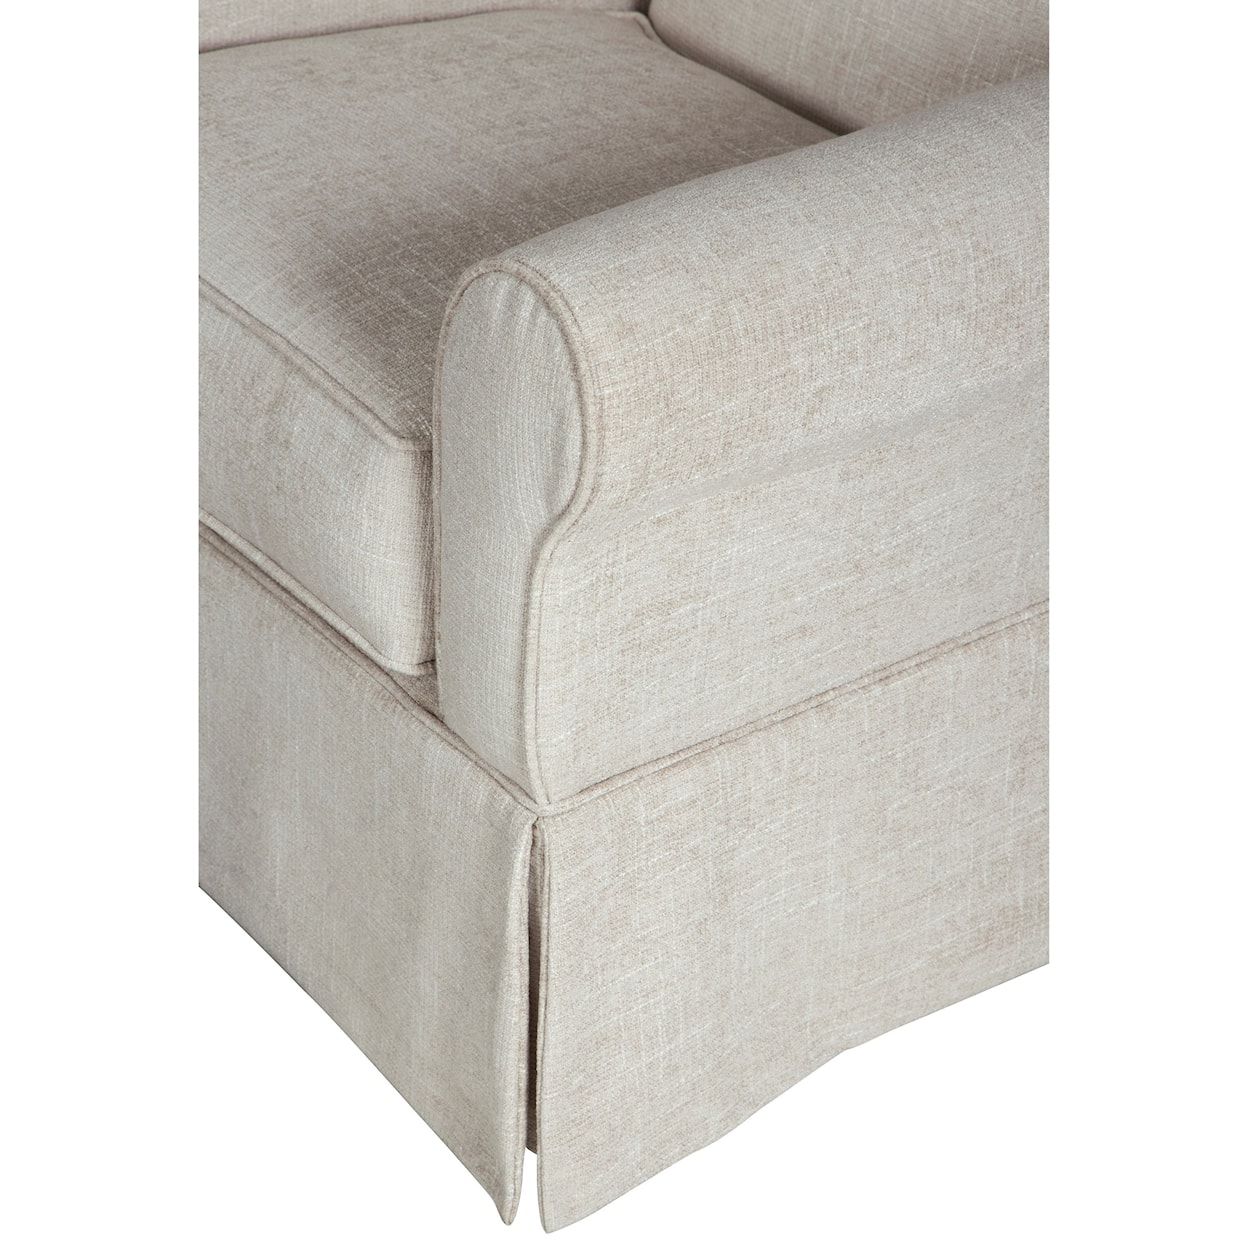 Ashley Furniture Signature Design Searcy Swivel Glider Accent Chair